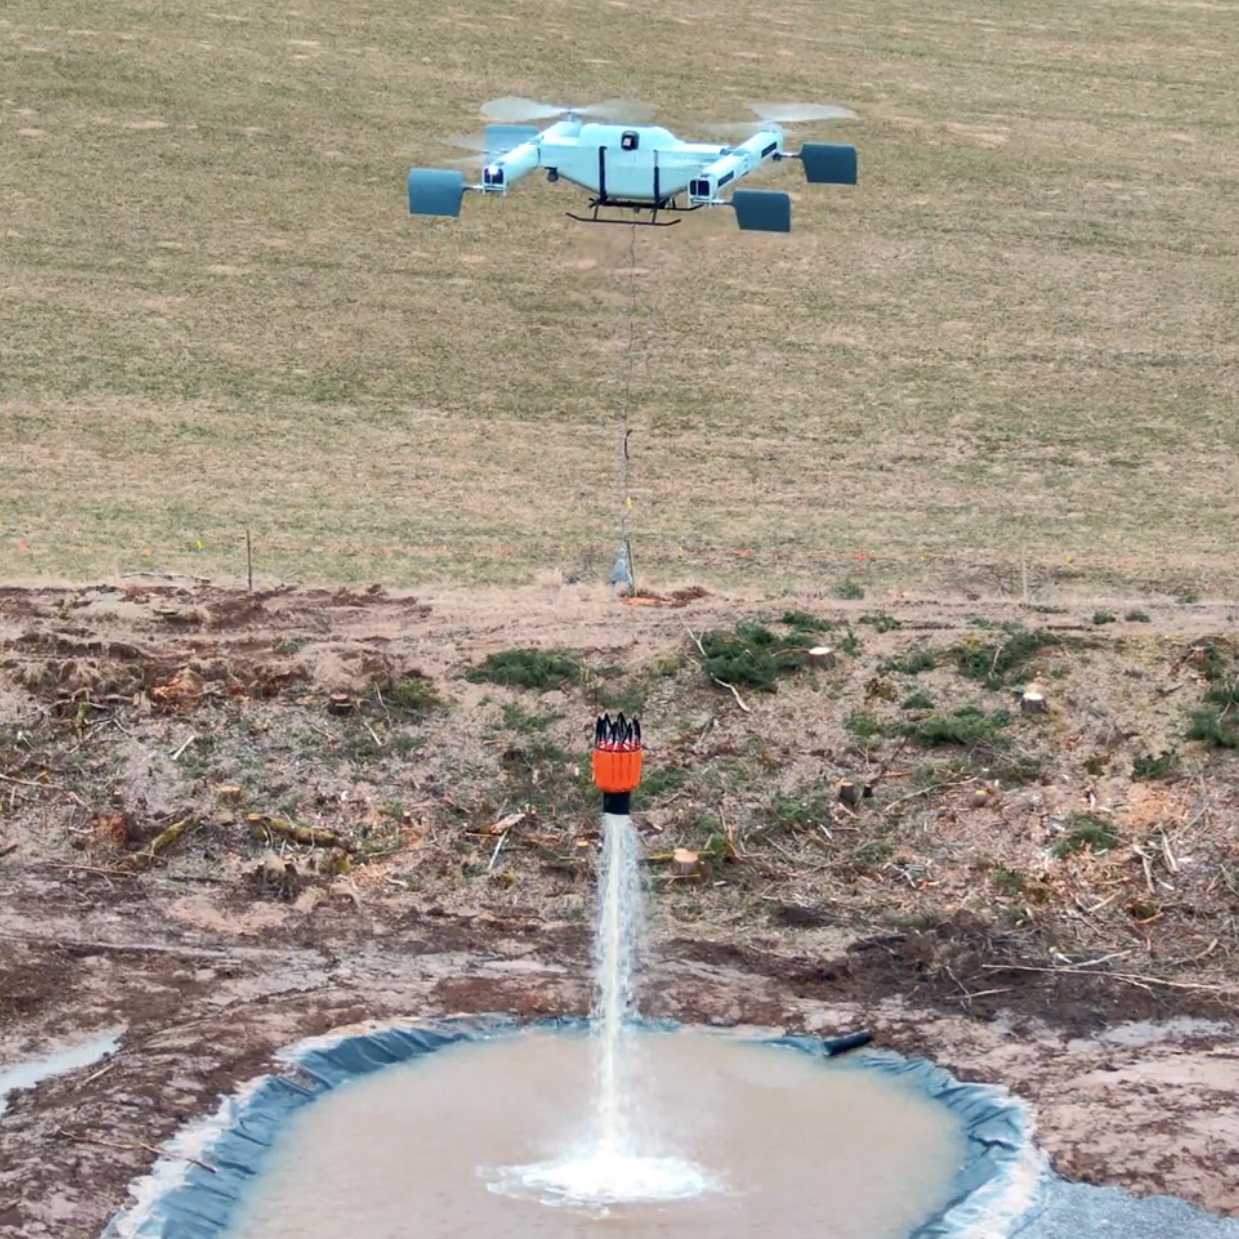 FireSwarm ACC Thunderwasp Drone Bucketing Water During Testing